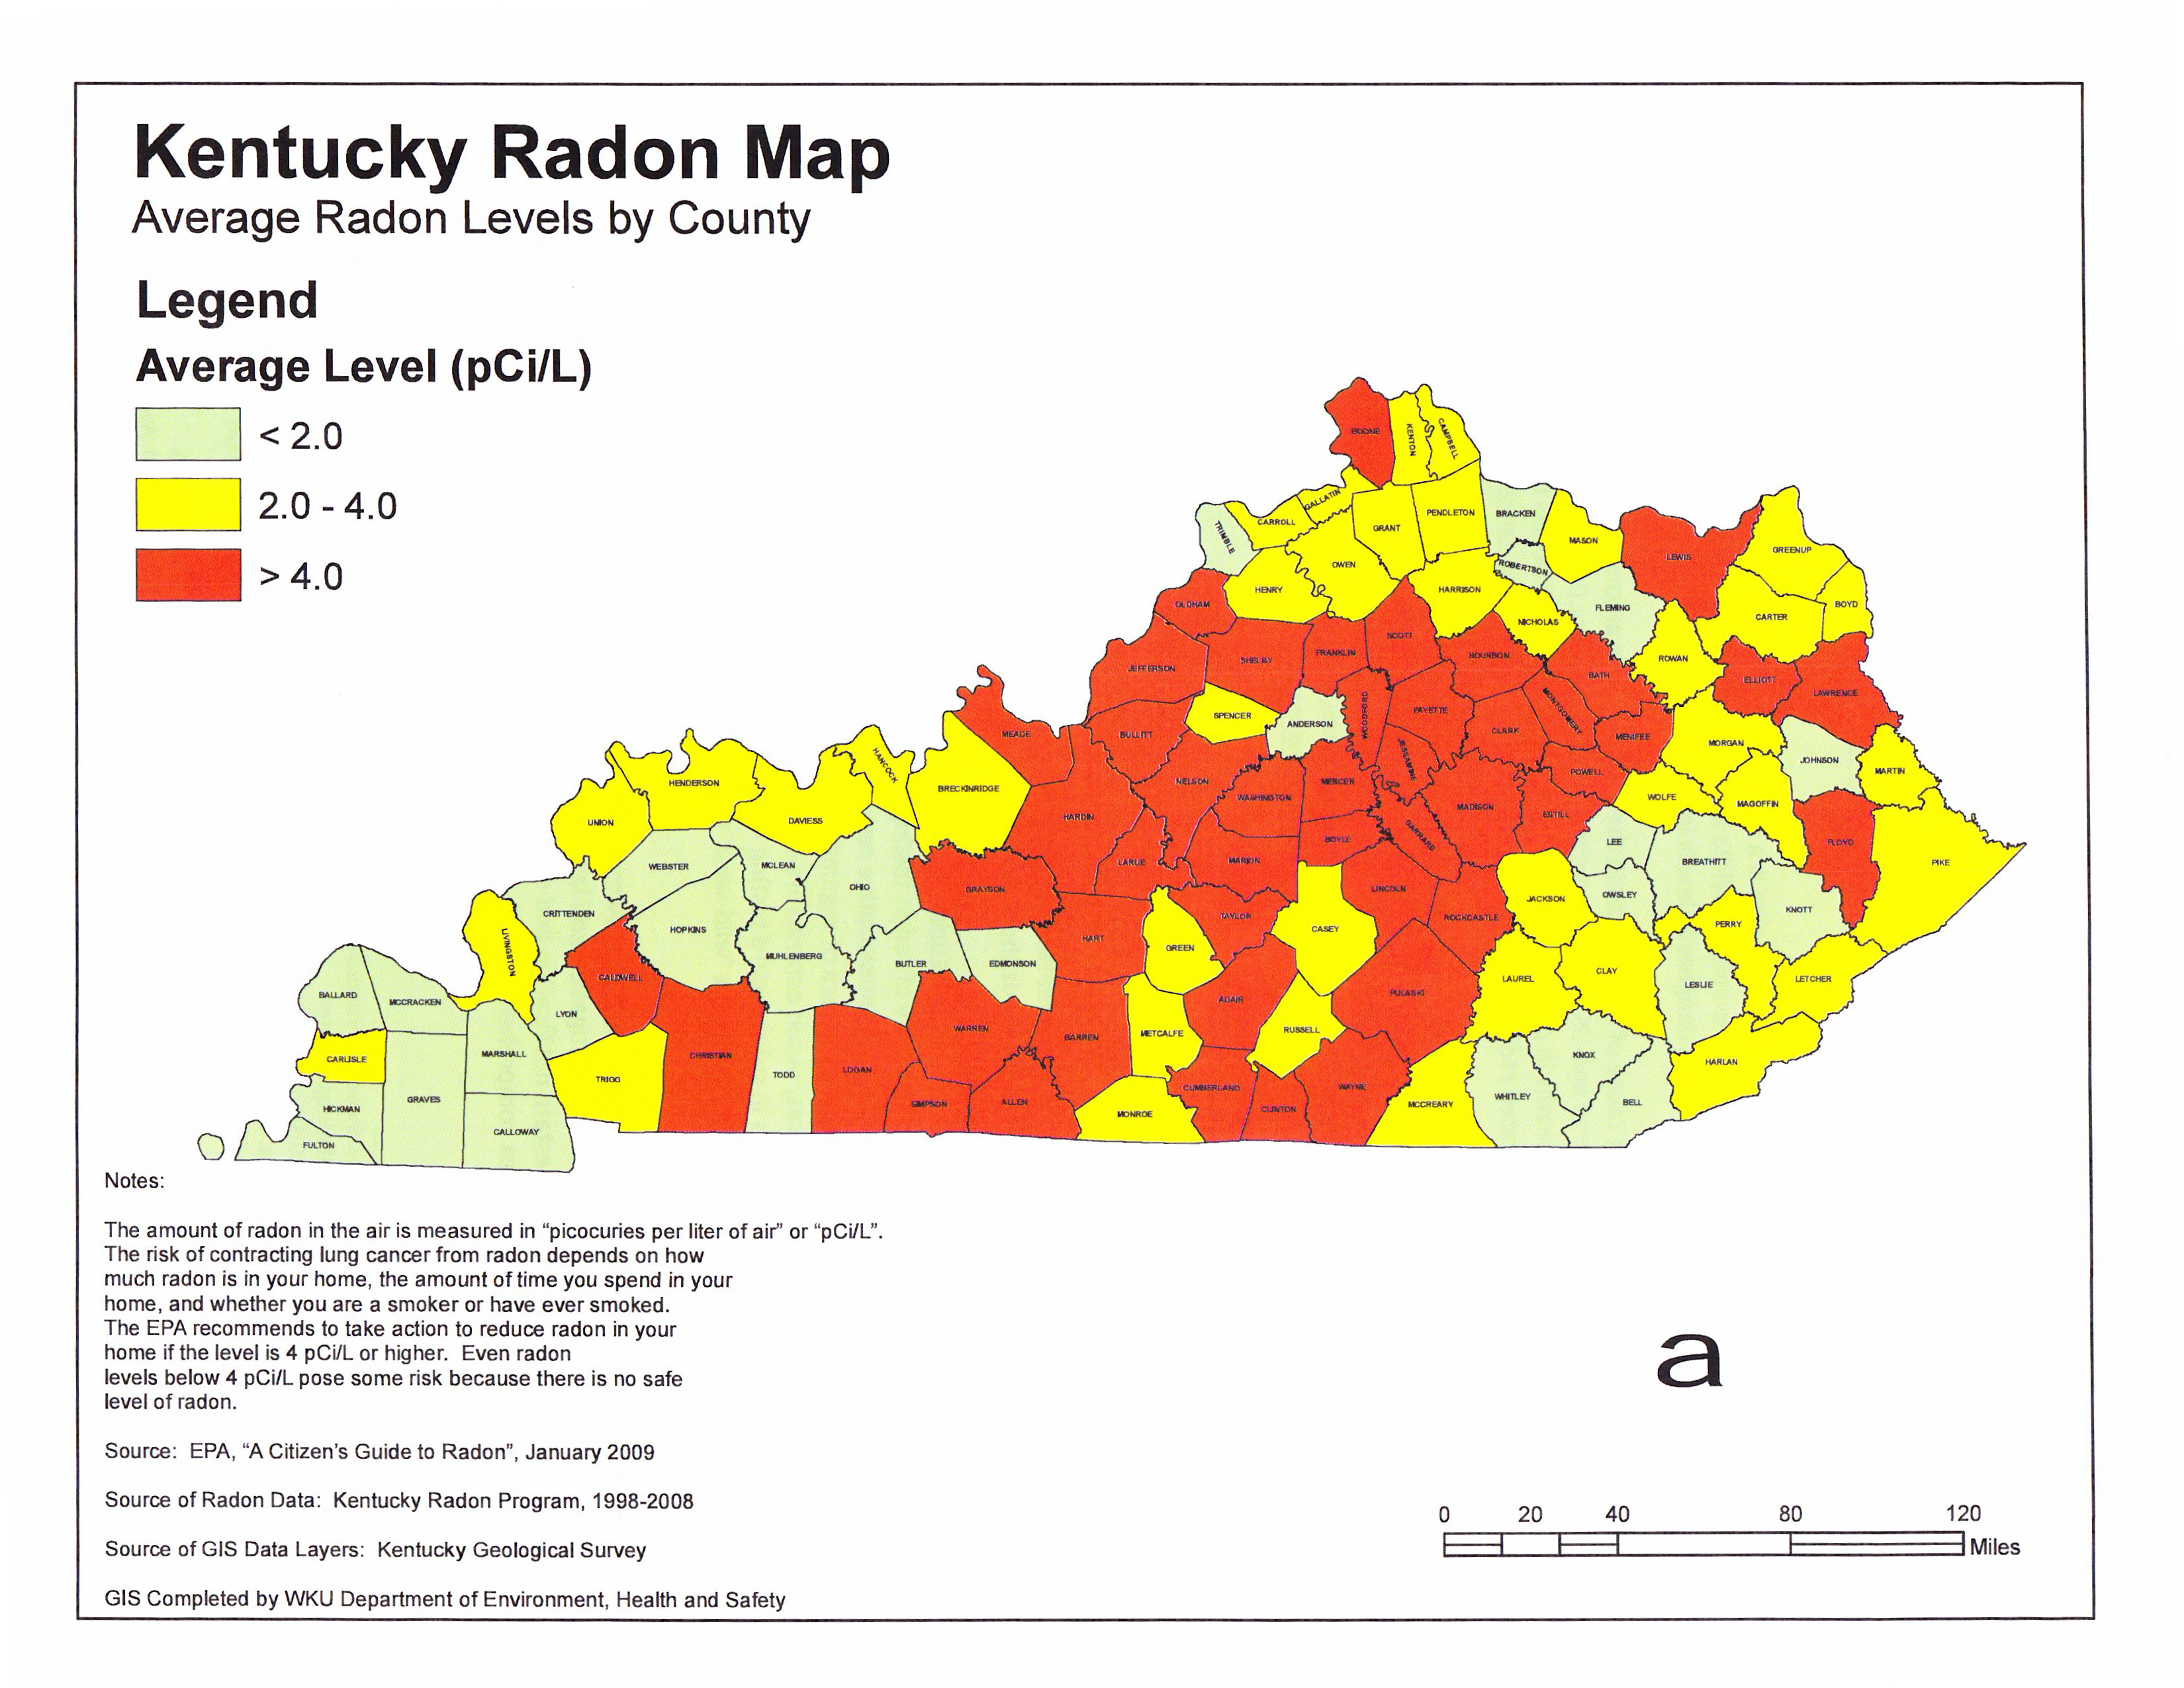 Radon Levels in Kentucky Counties